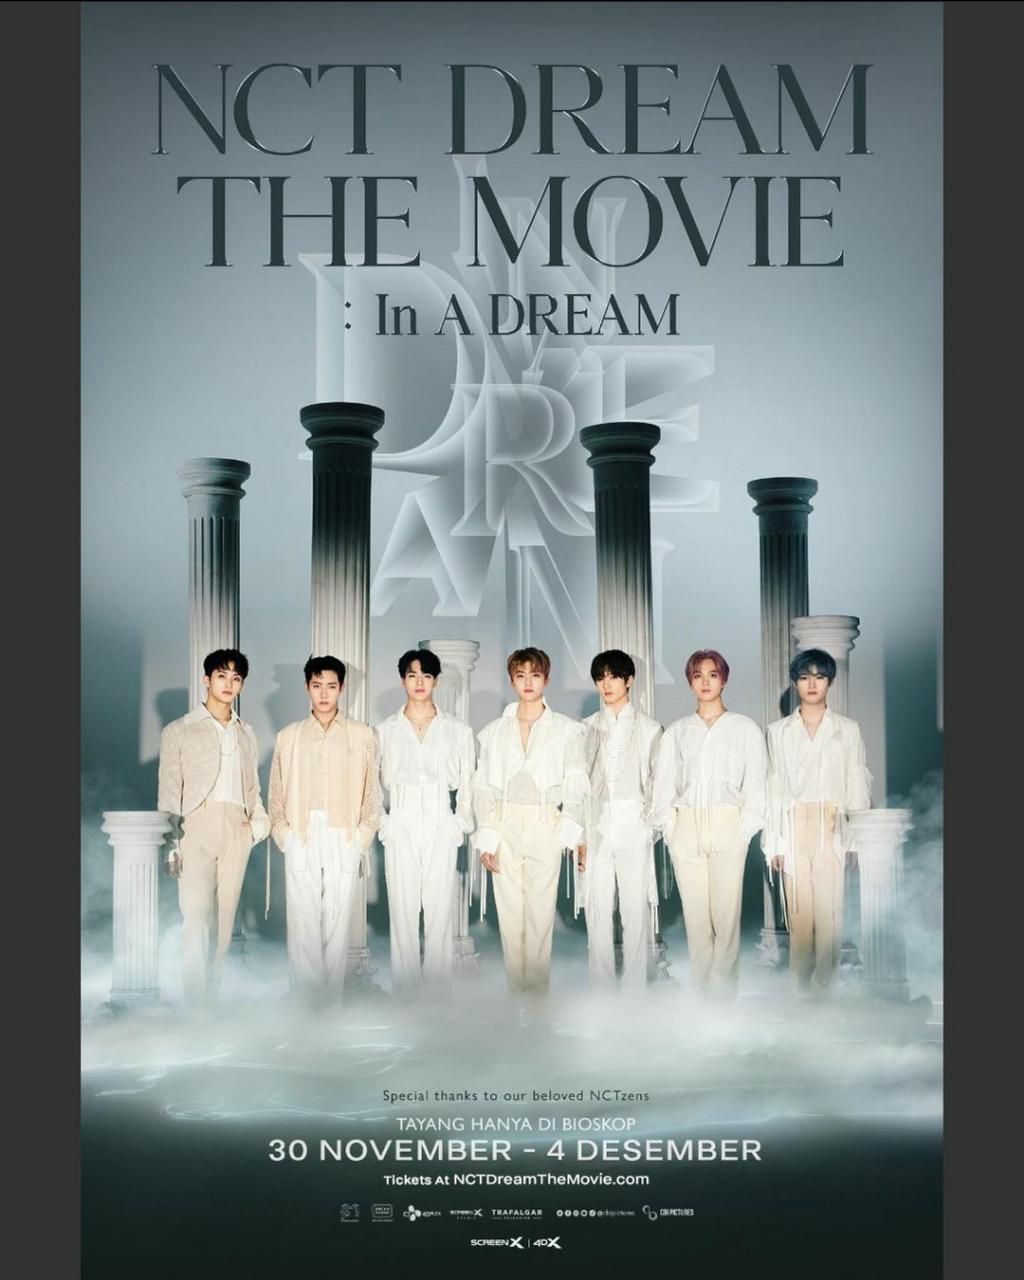 NCT Dream The Movie In A Dream